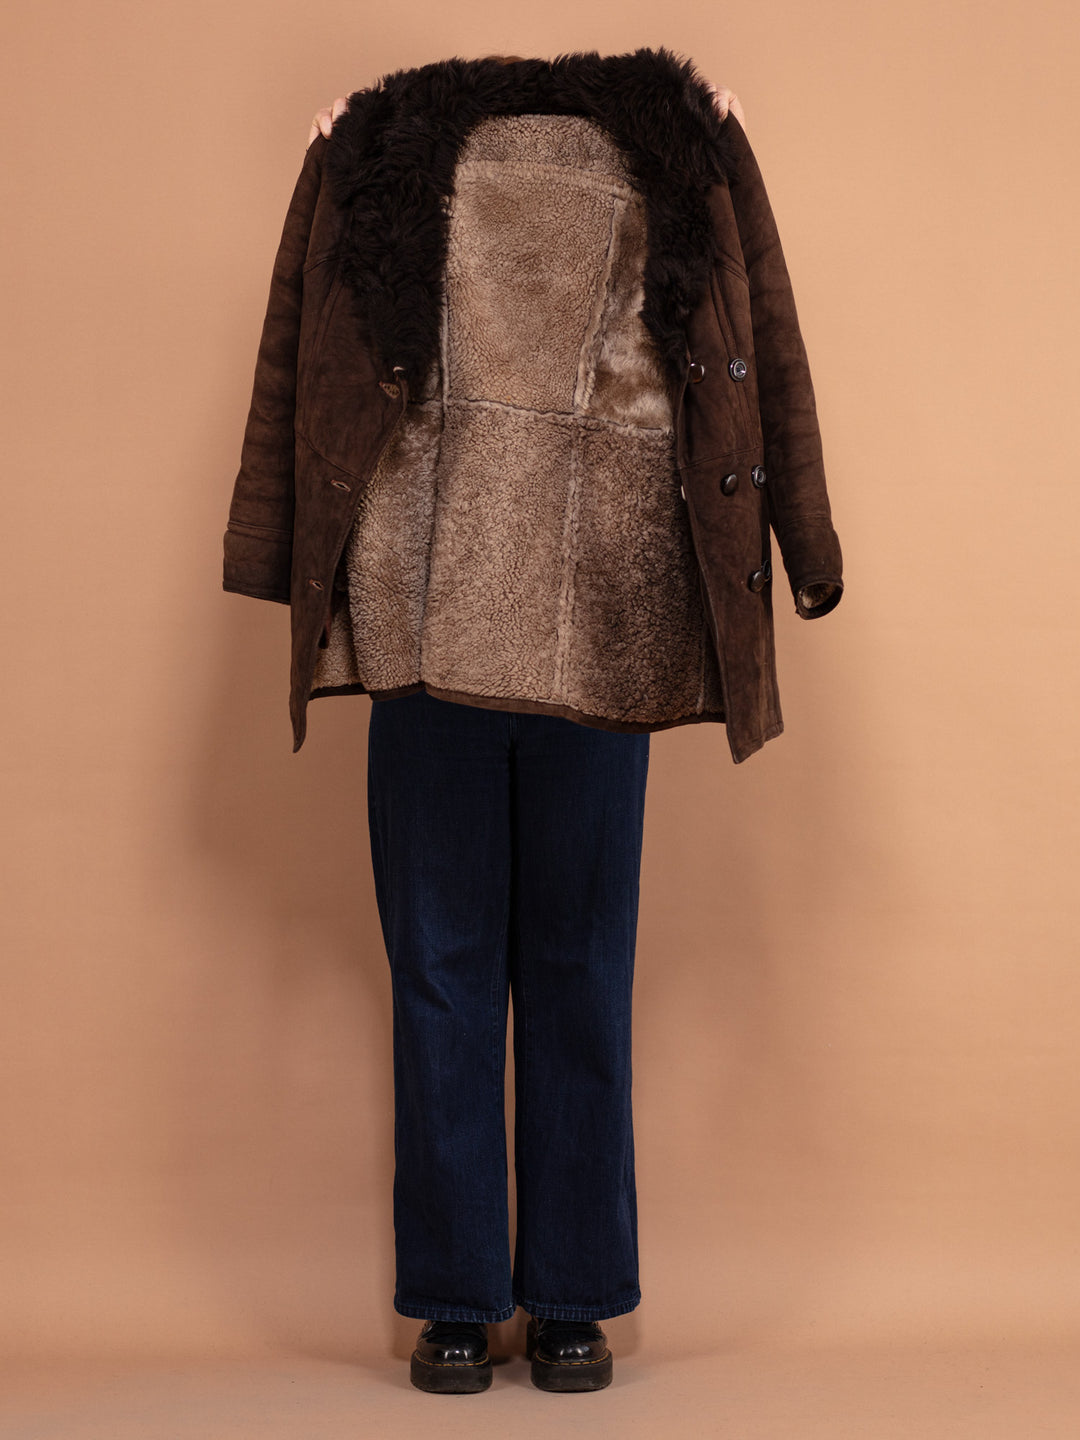 Sheepskin Suede Coat 70's, Size M Medium, Vintage Classic Shearling Winter Coat, Boho Brown Women Overcoat, Double Breasted Fur Collar Coat